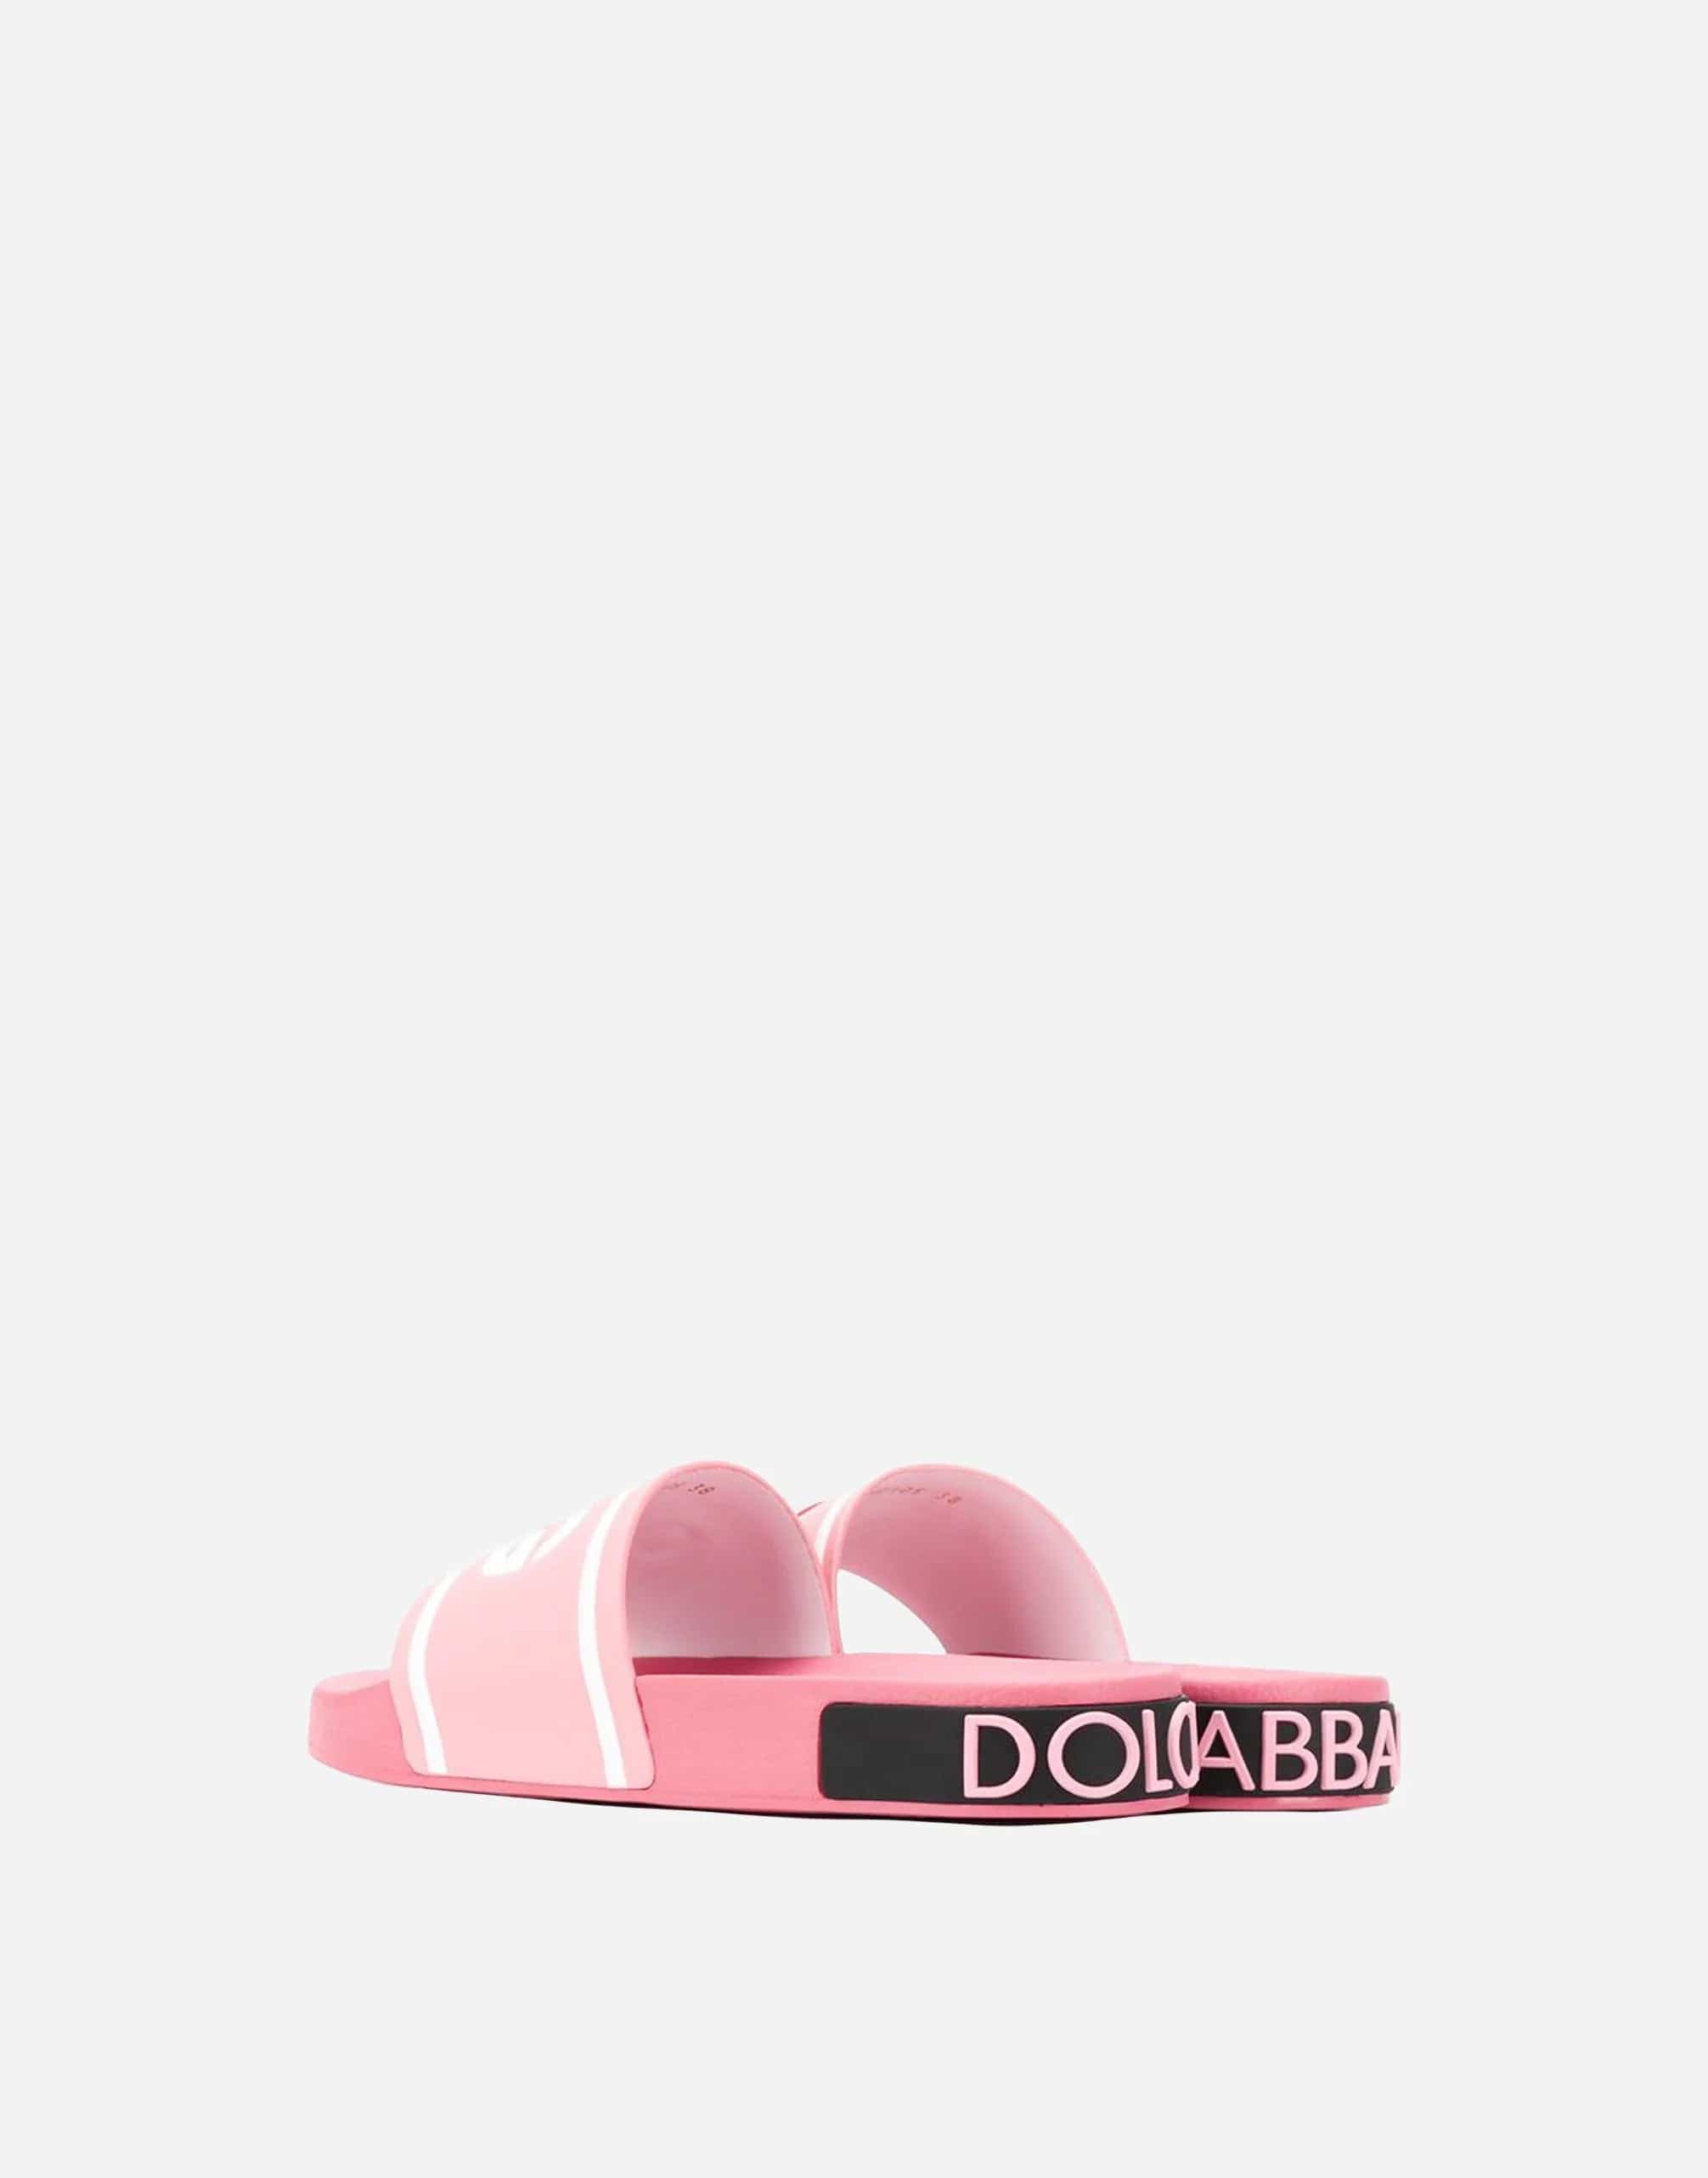 Dolce & Gabbana I Love D&G Slides